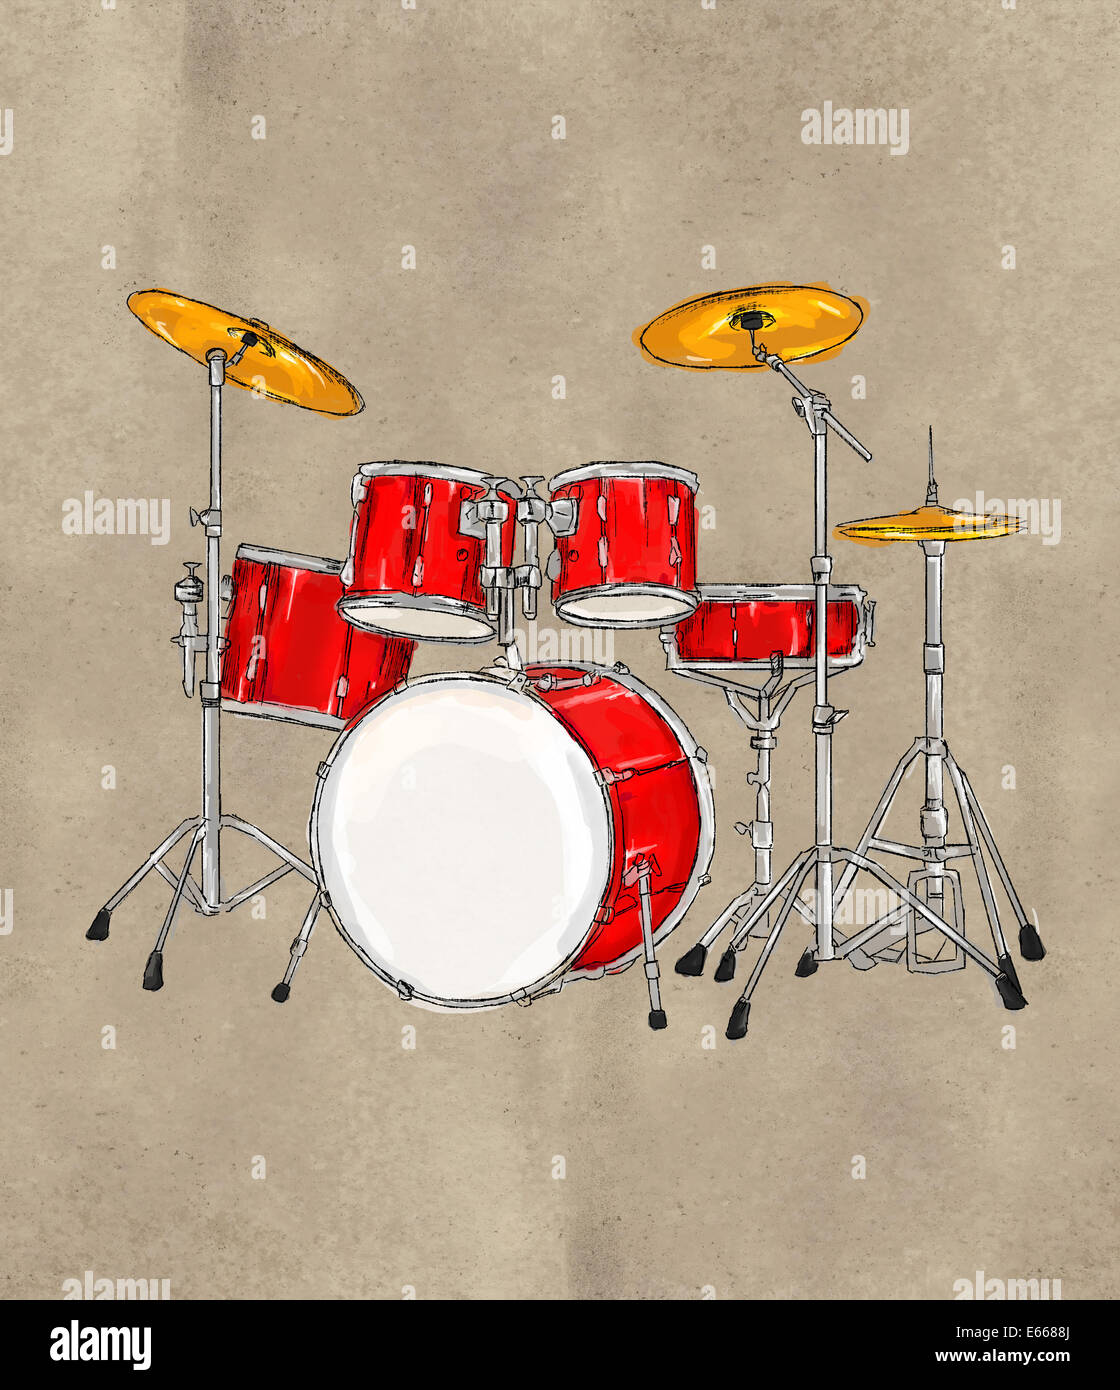 8405 Drum Set Drawing Images Stock Photos  Vectors  Shutterstock